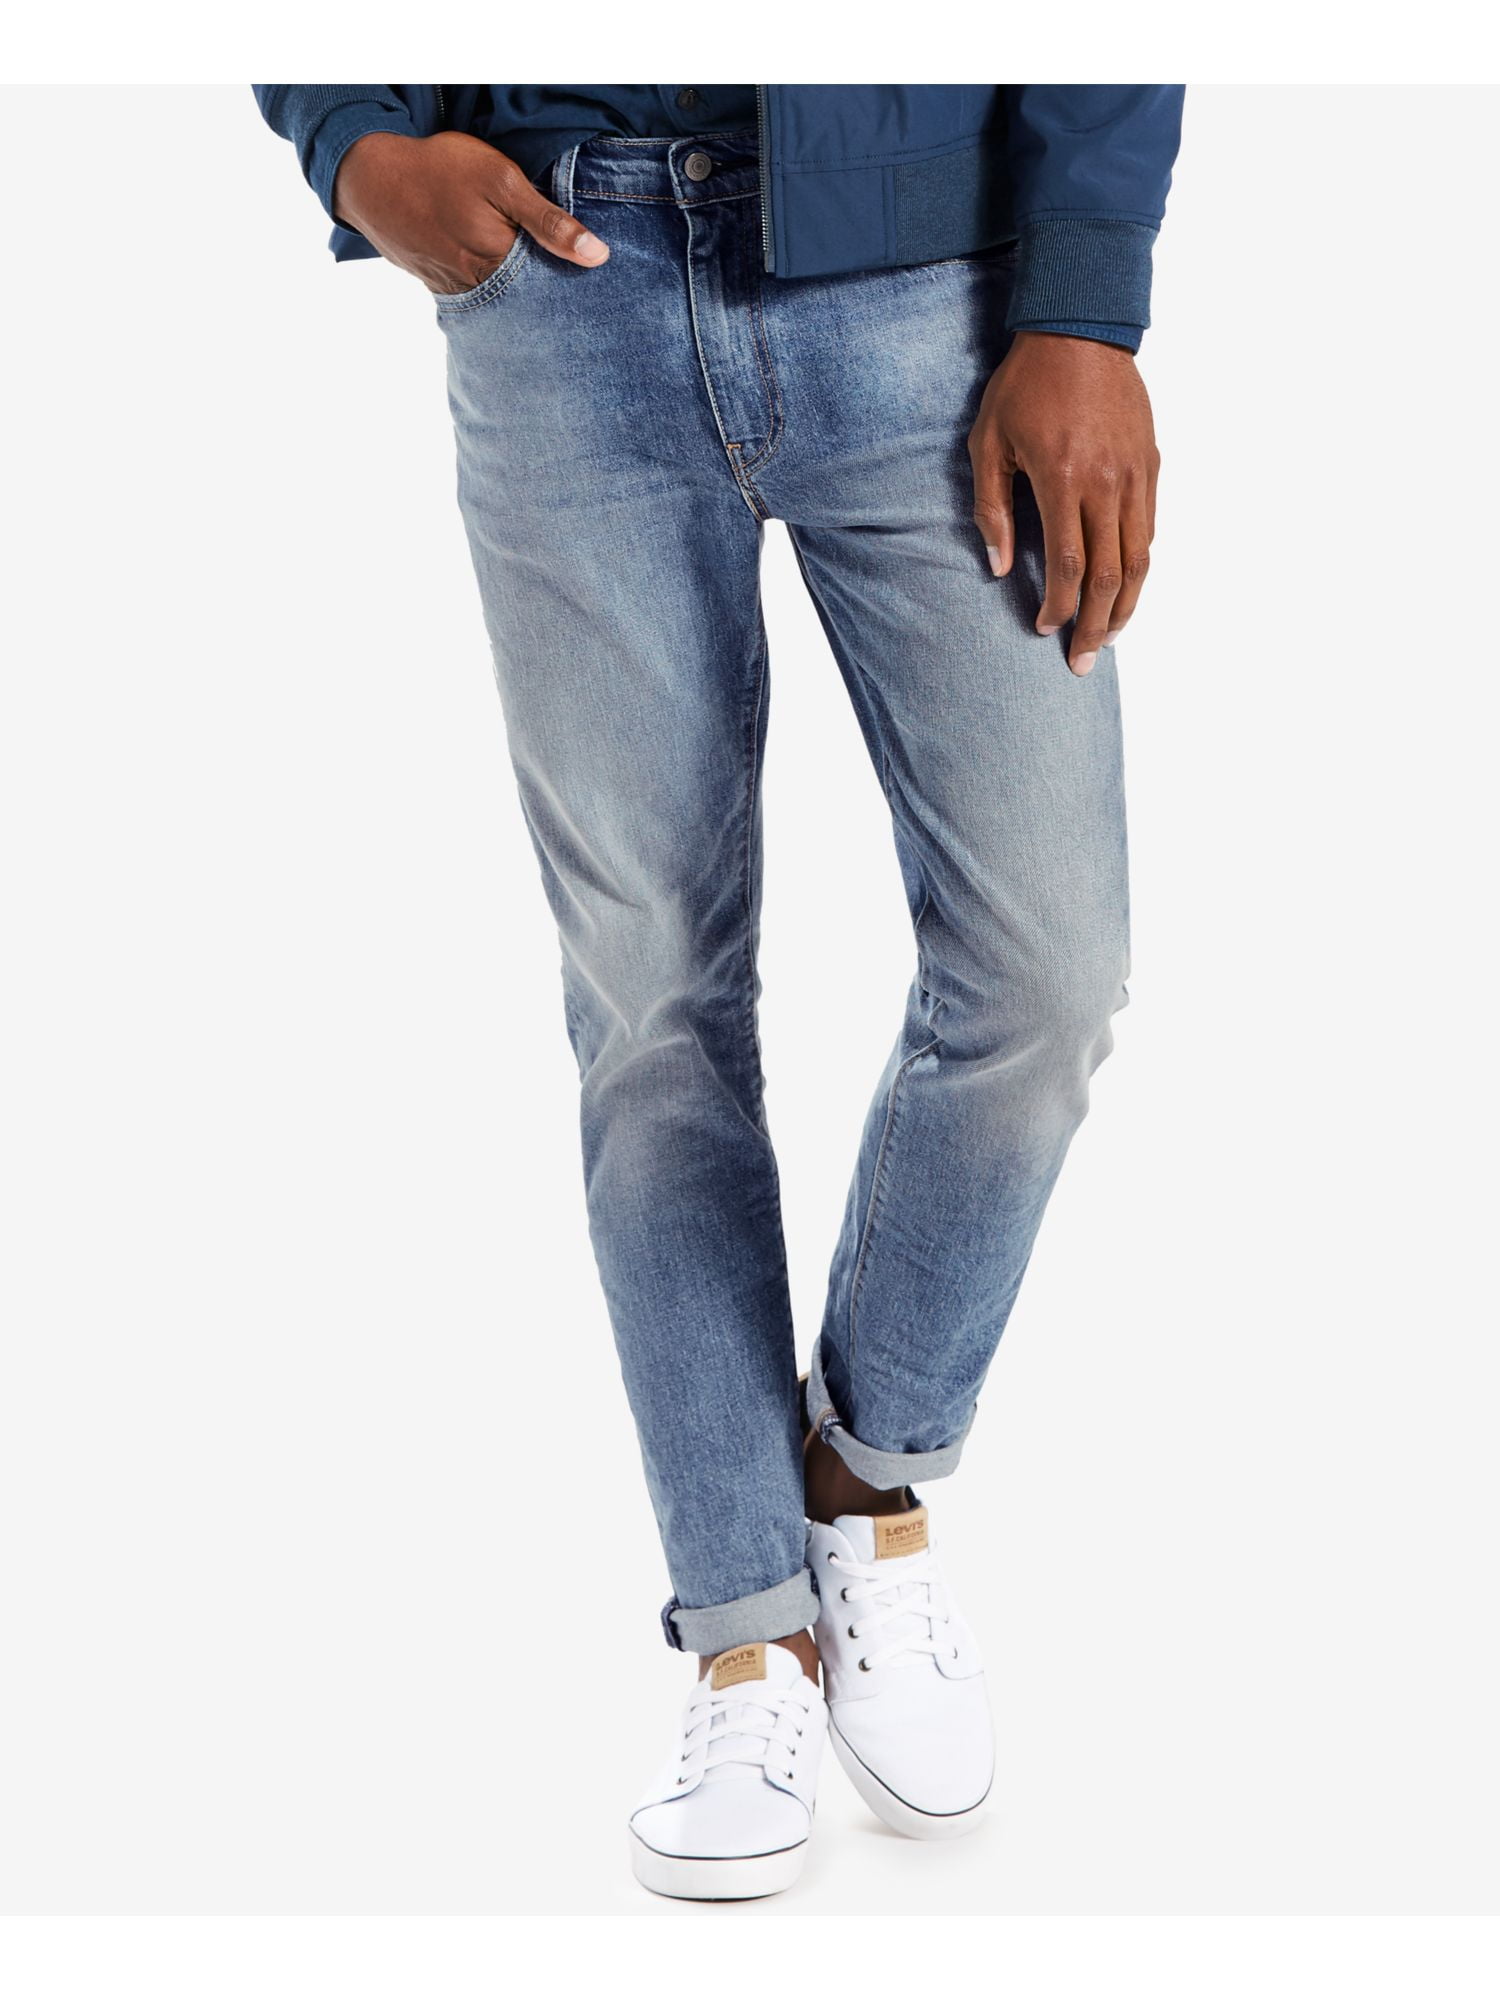 Levi's SIN CITY-WATERLESS Men's 512 Slim Taper Fit Stretch Jeans, US 33x30  